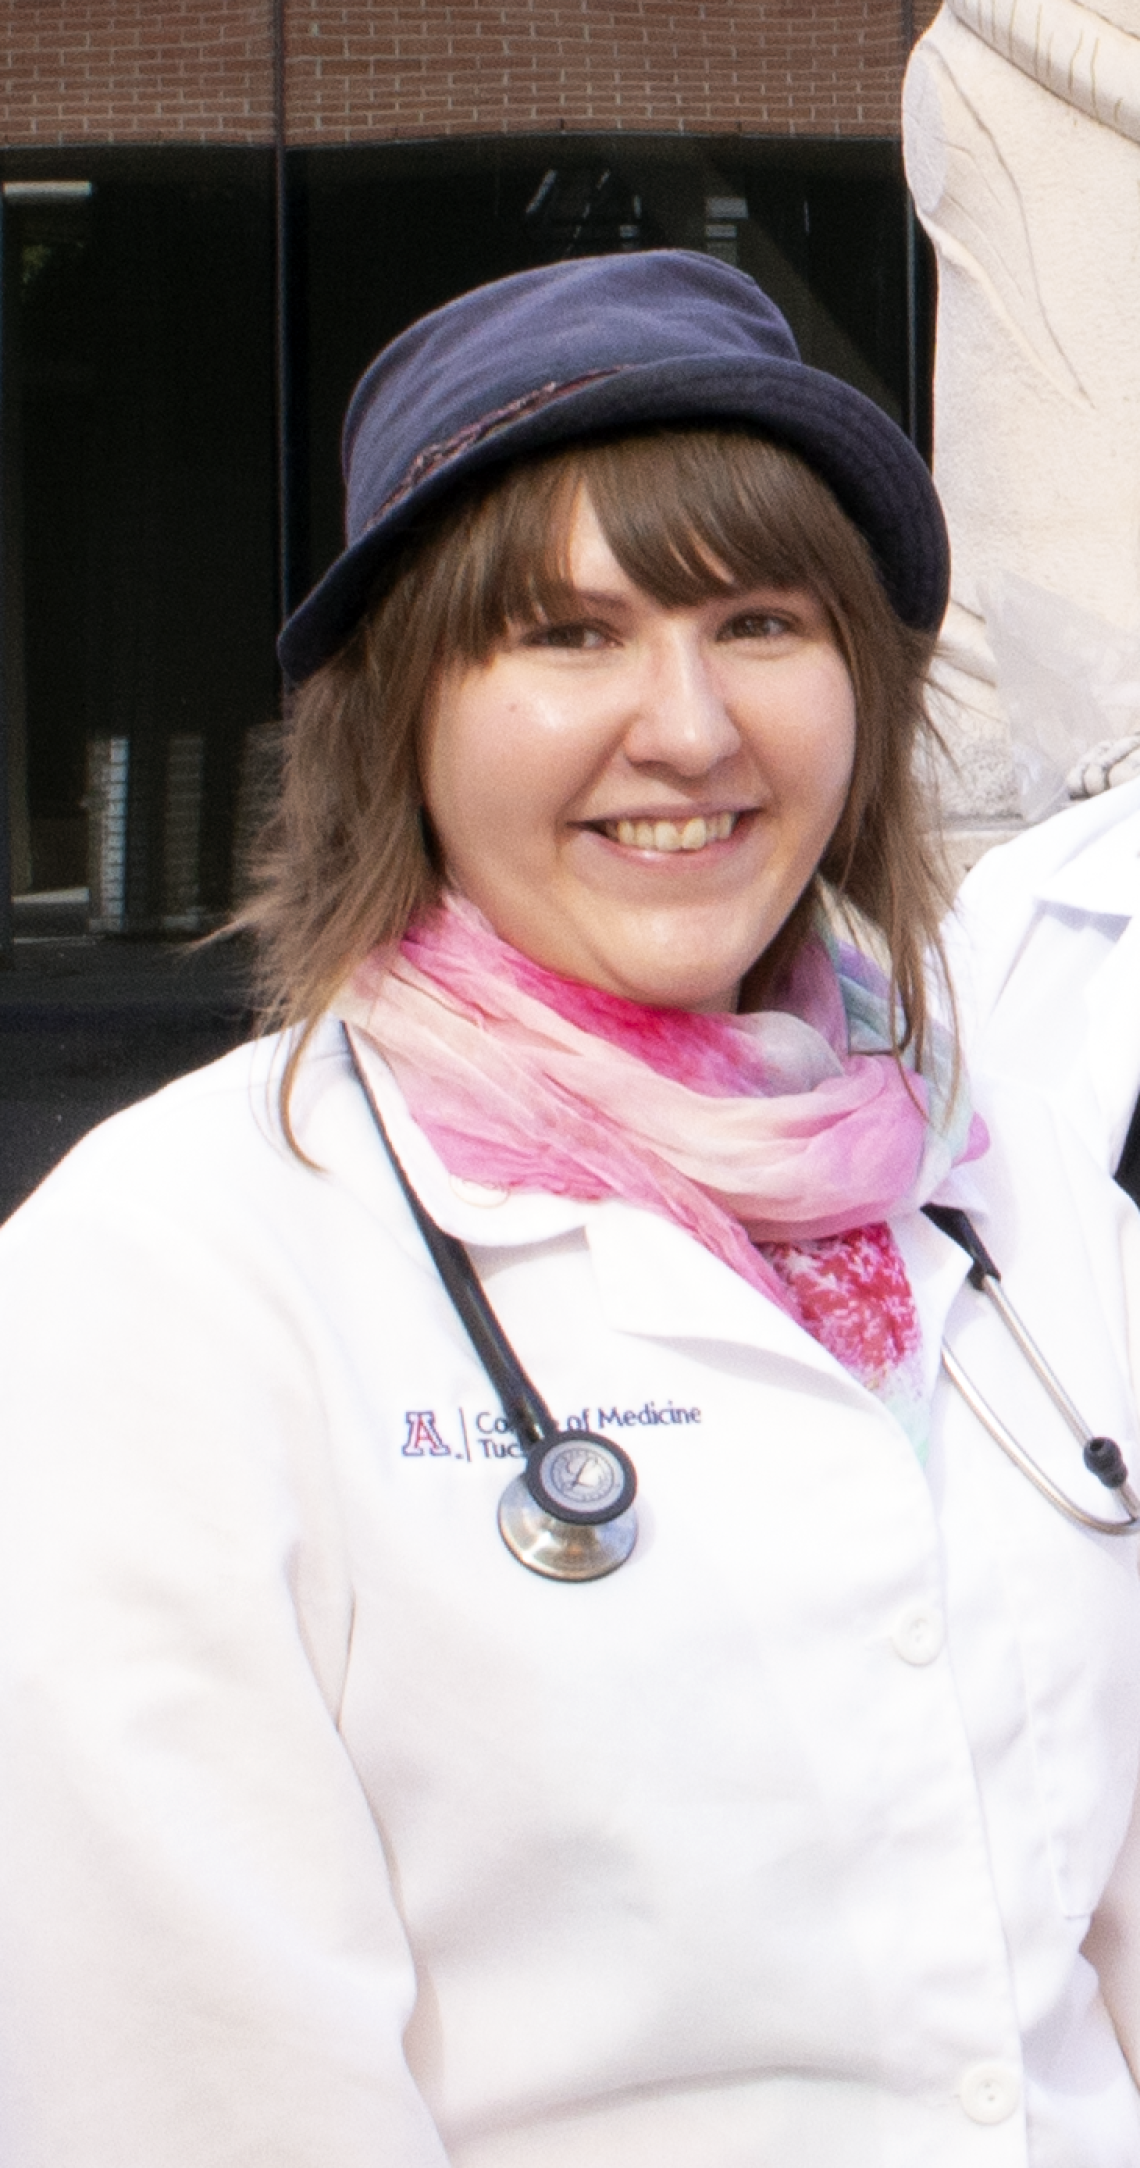 Britt Gratreak smiling for photo, wearing white lab coat